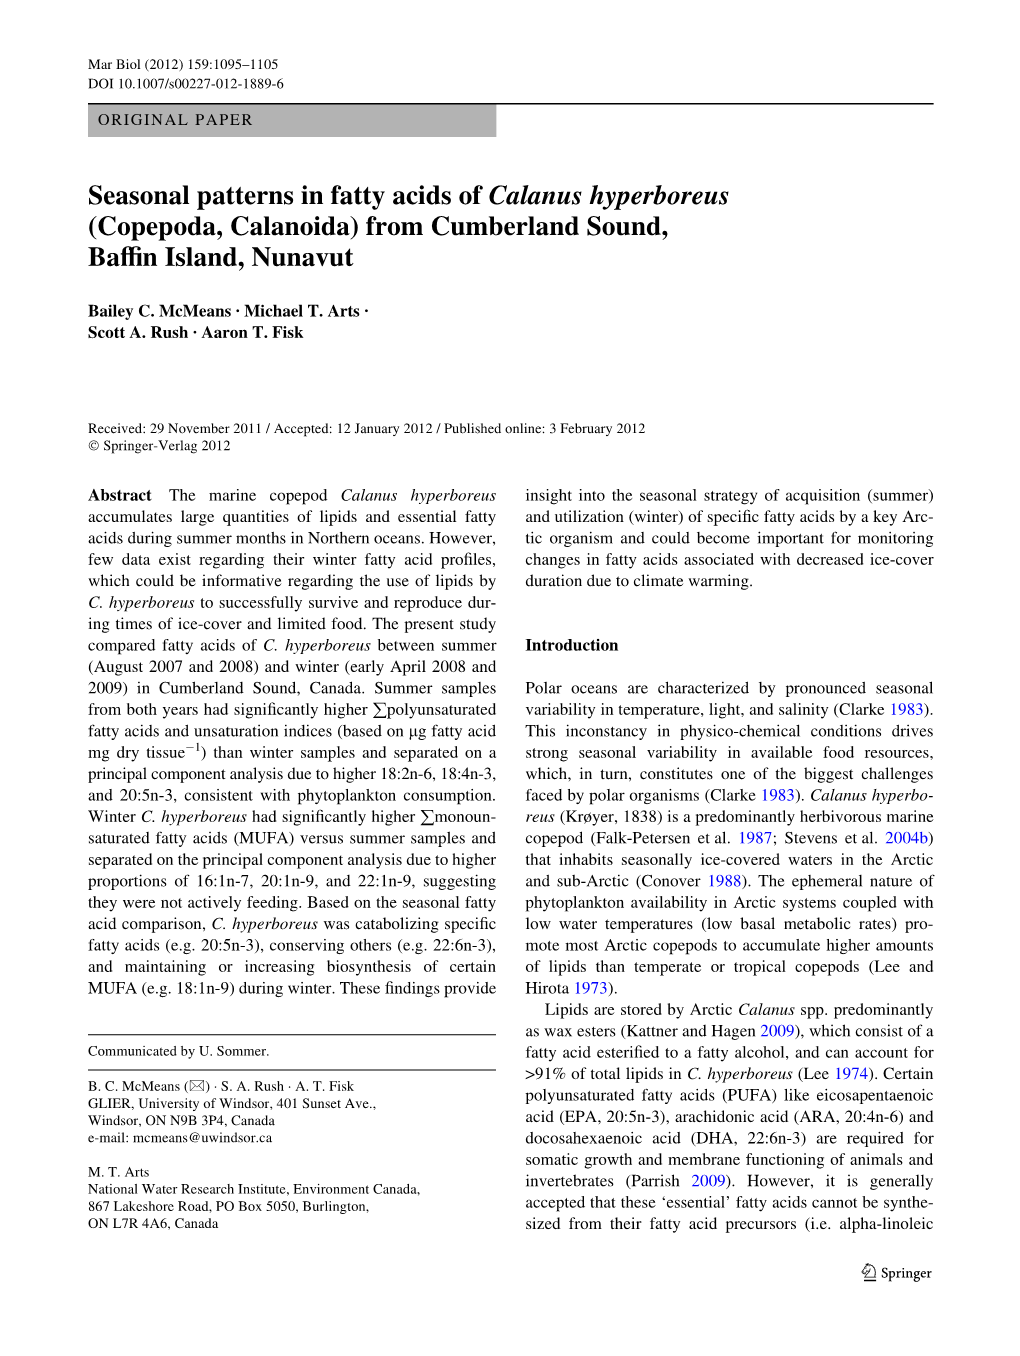 Seasonal Patterns in Fatty Acids of Calanus Hyperboreus (Copepoda, Calanoida) from Cumberland Sound, Bayn Island, Nunavut